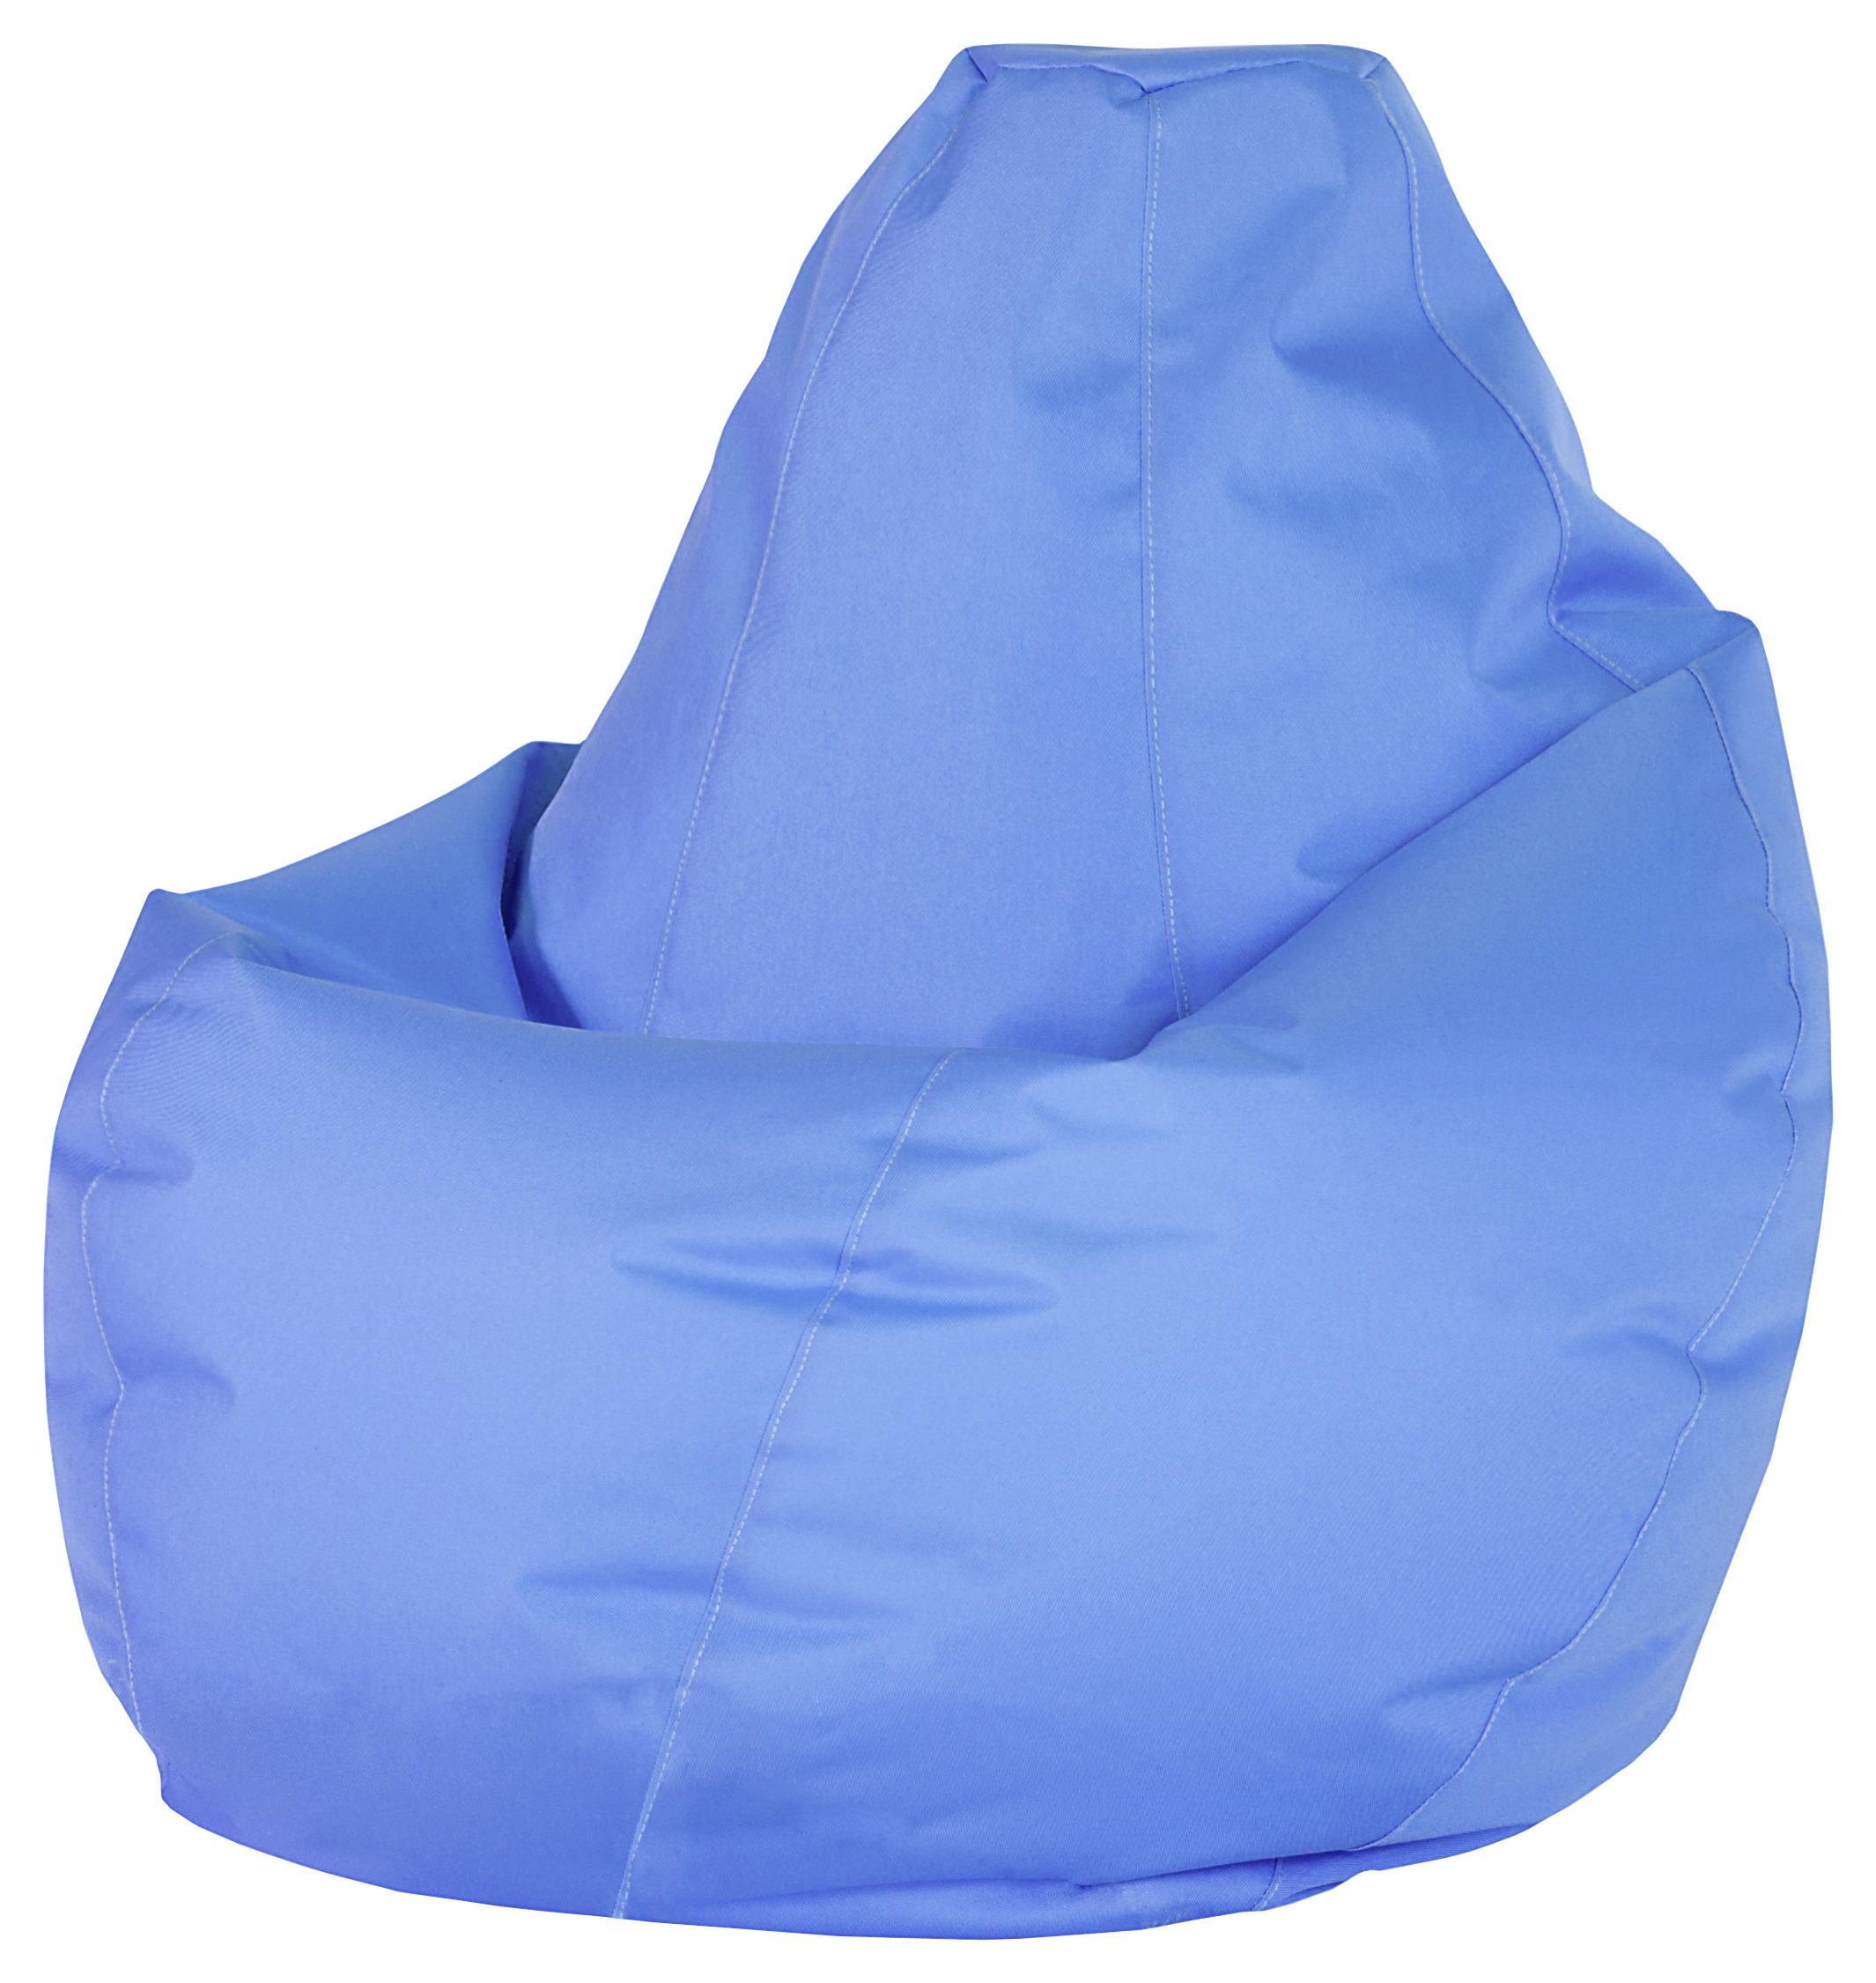 Vreća Za Sjedenje Soft L - plava, Modern, tekstil (120cm) - Based